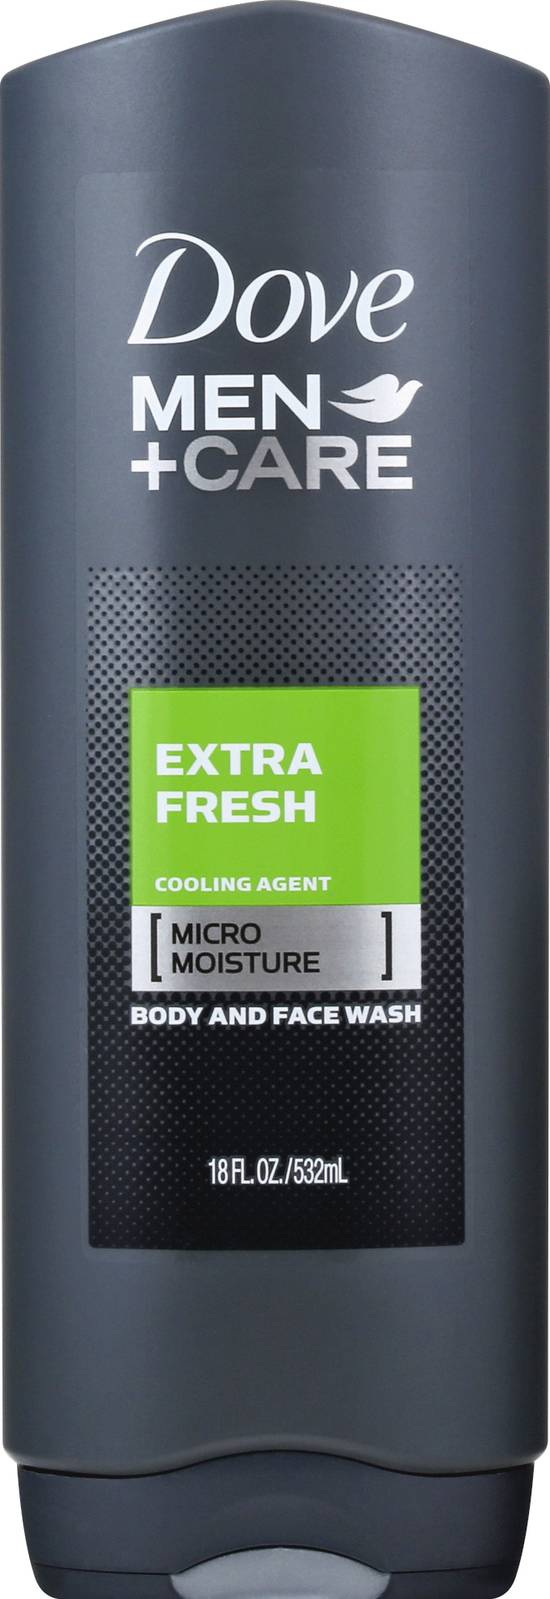 Dove Men+Care Extra Fresh Body & Face Wash (18 fl oz)